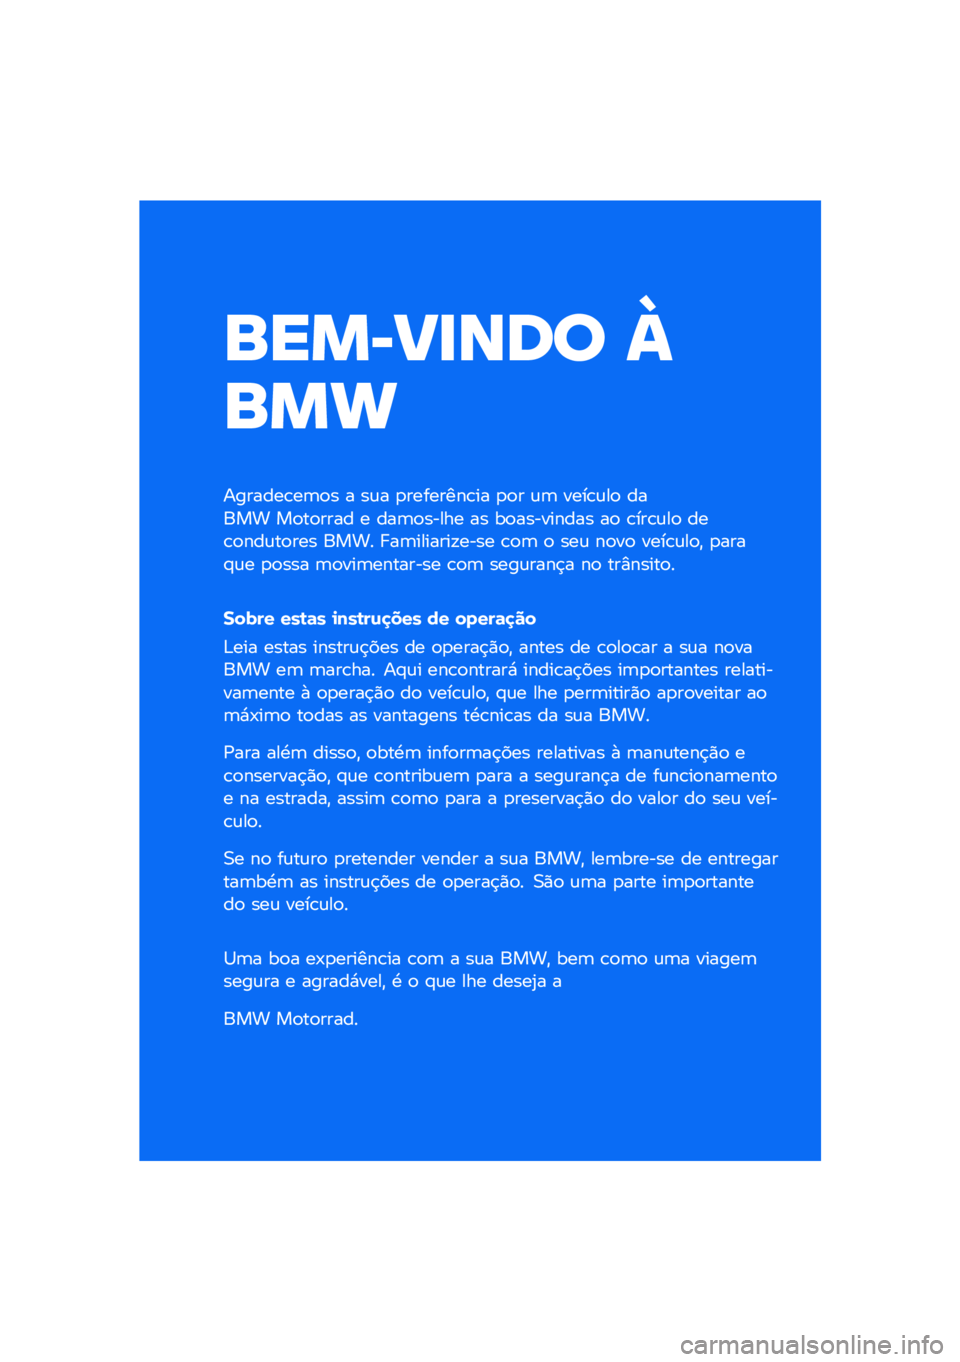 BMW MOTORRAD F 900 R 2020  Manual do condutor (in Portuguese) �������\b�	�
 �
���
�������\b��	�
� � ��\f� �
��������\b�� �
�
� �\f�	 ����\b�\f��
 ����� ��
��
���� � ���	�
����� �� ��
��������� ��